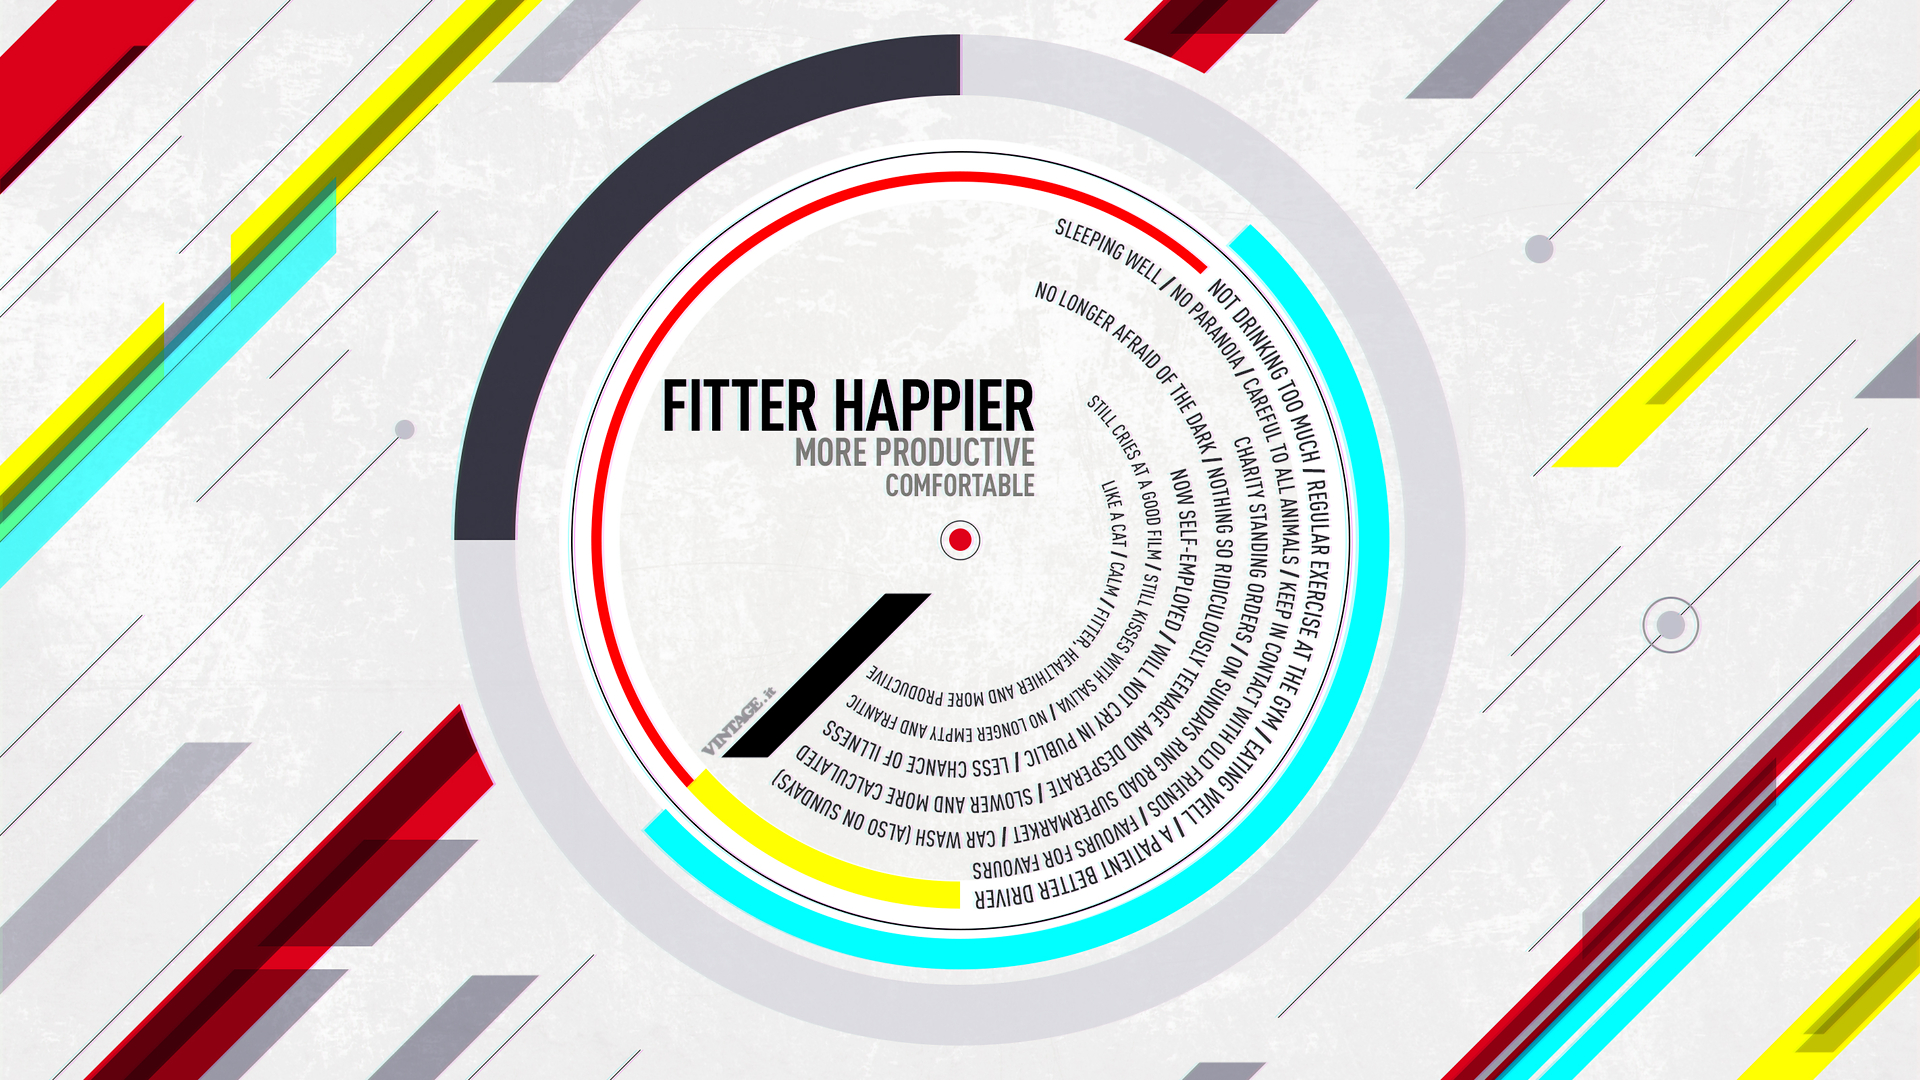 Fitter happier Radiohead wallpaper - Free Desktop HD iPad iPhone wallpapers